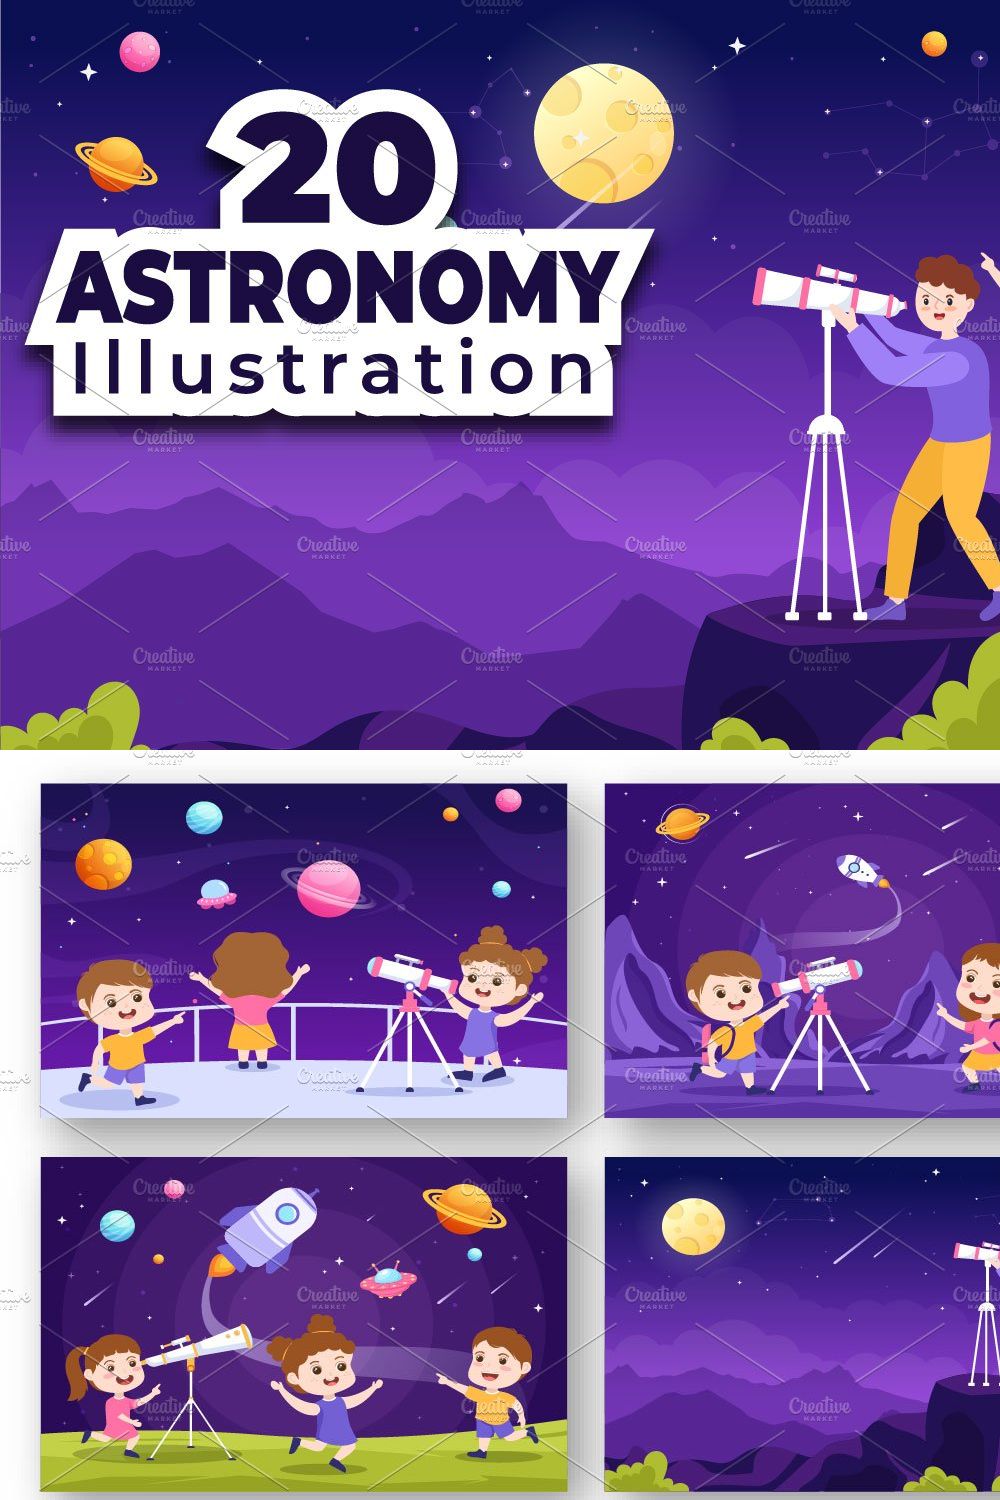 20 Astronomy Cartoon Illustration pinterest preview image.